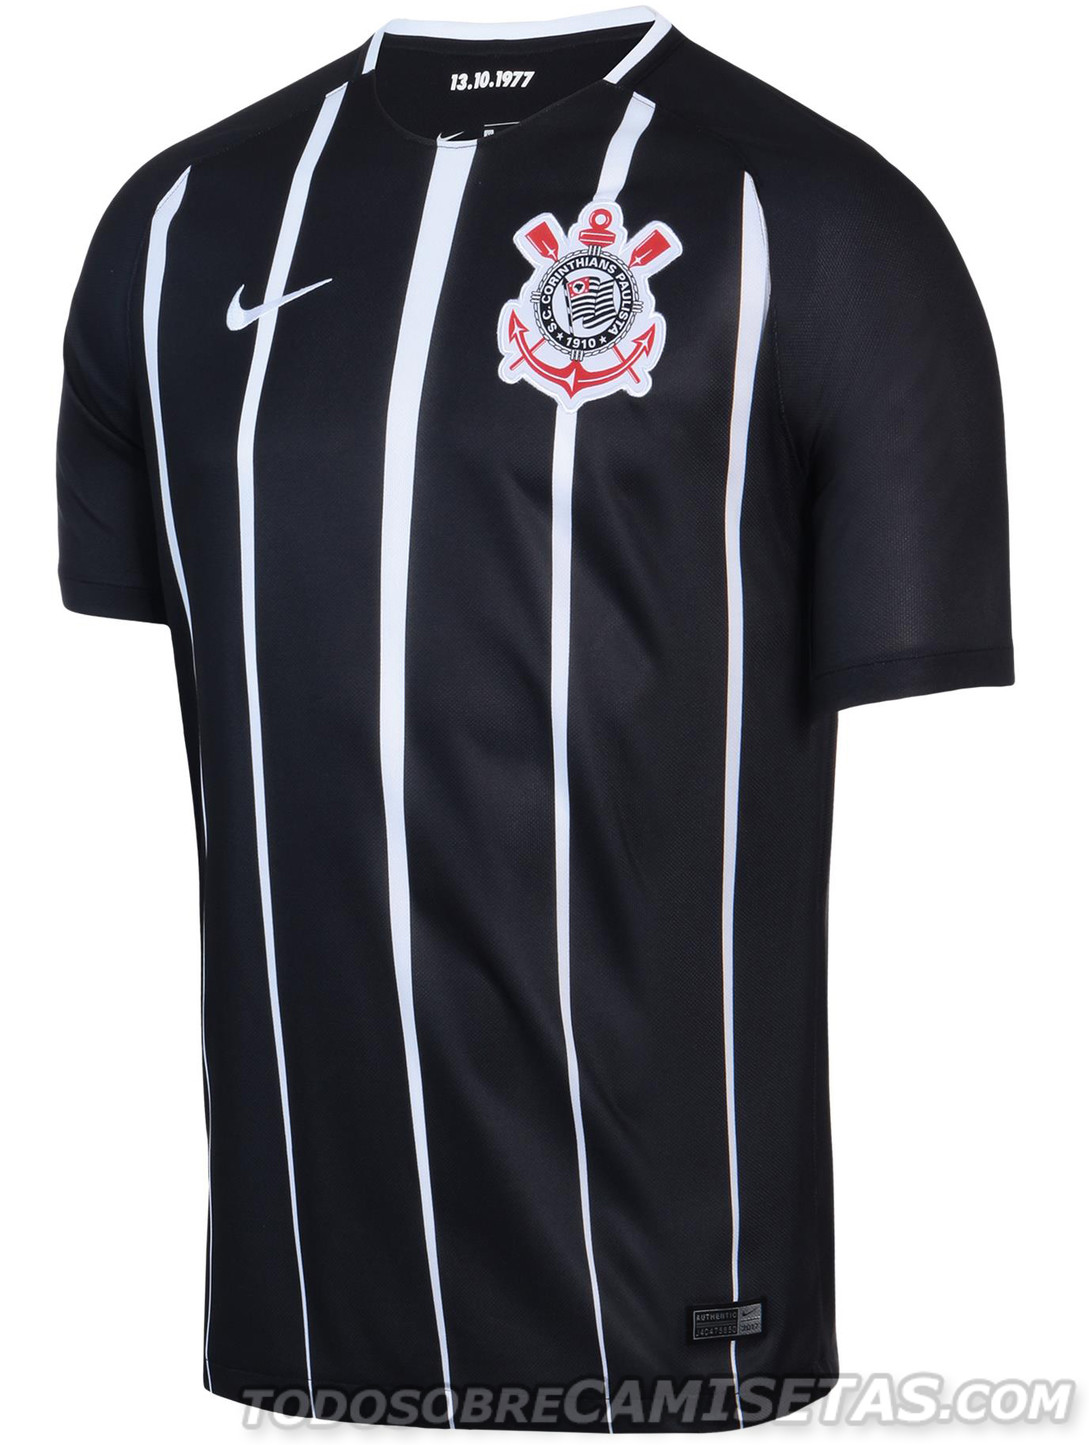 Camisetas Nike de Corinthians 2017